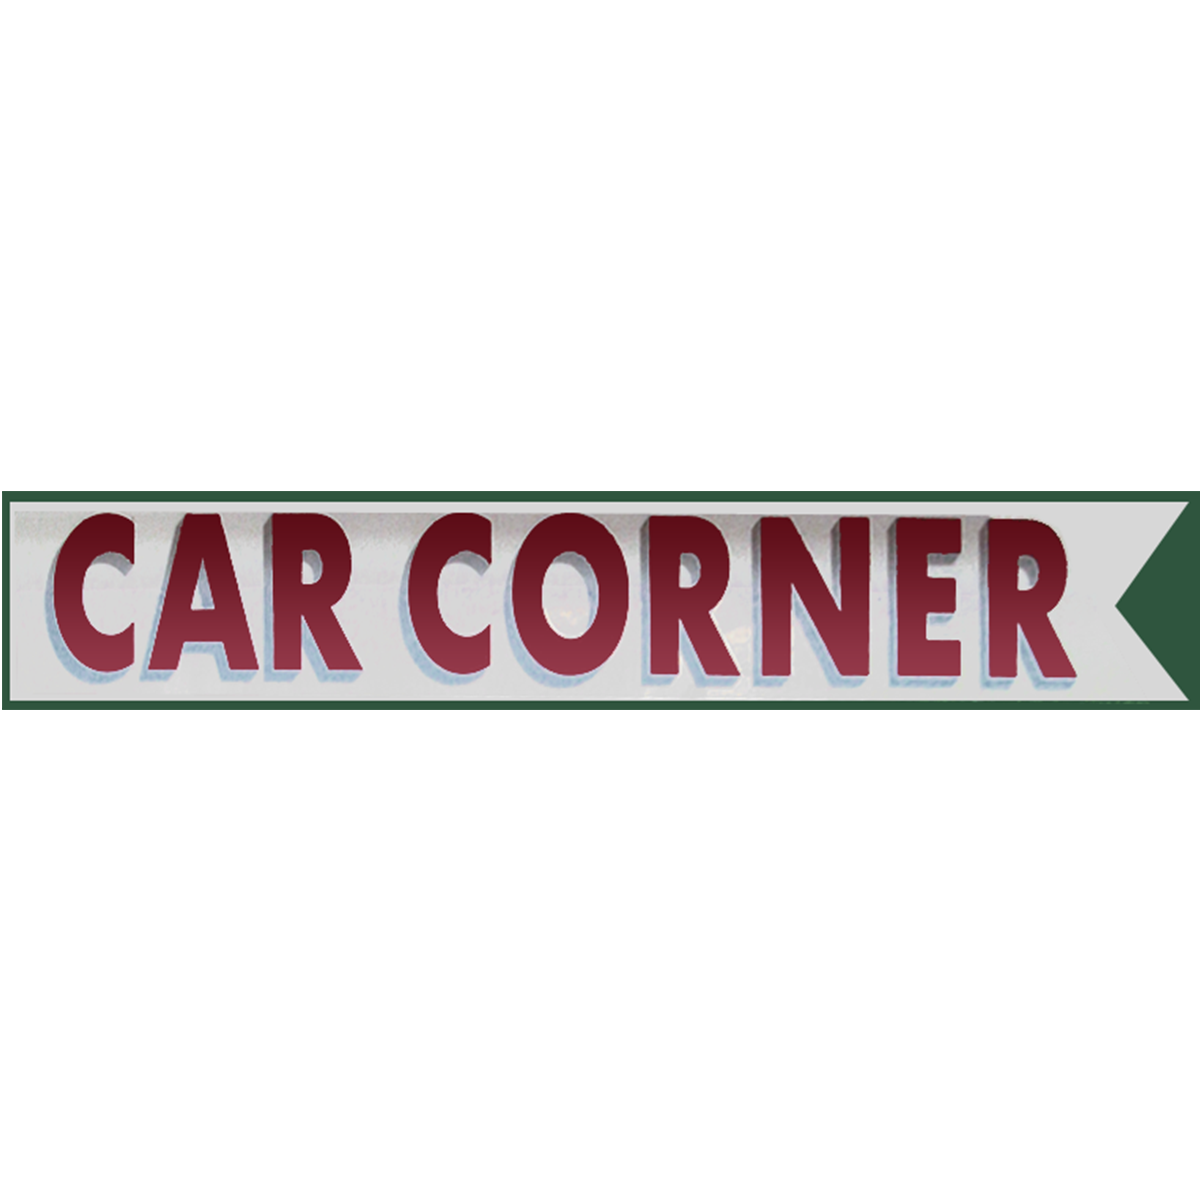 Car Corner - Manchester, CT 06040 - (860)647-7972 | ShowMeLocal.com